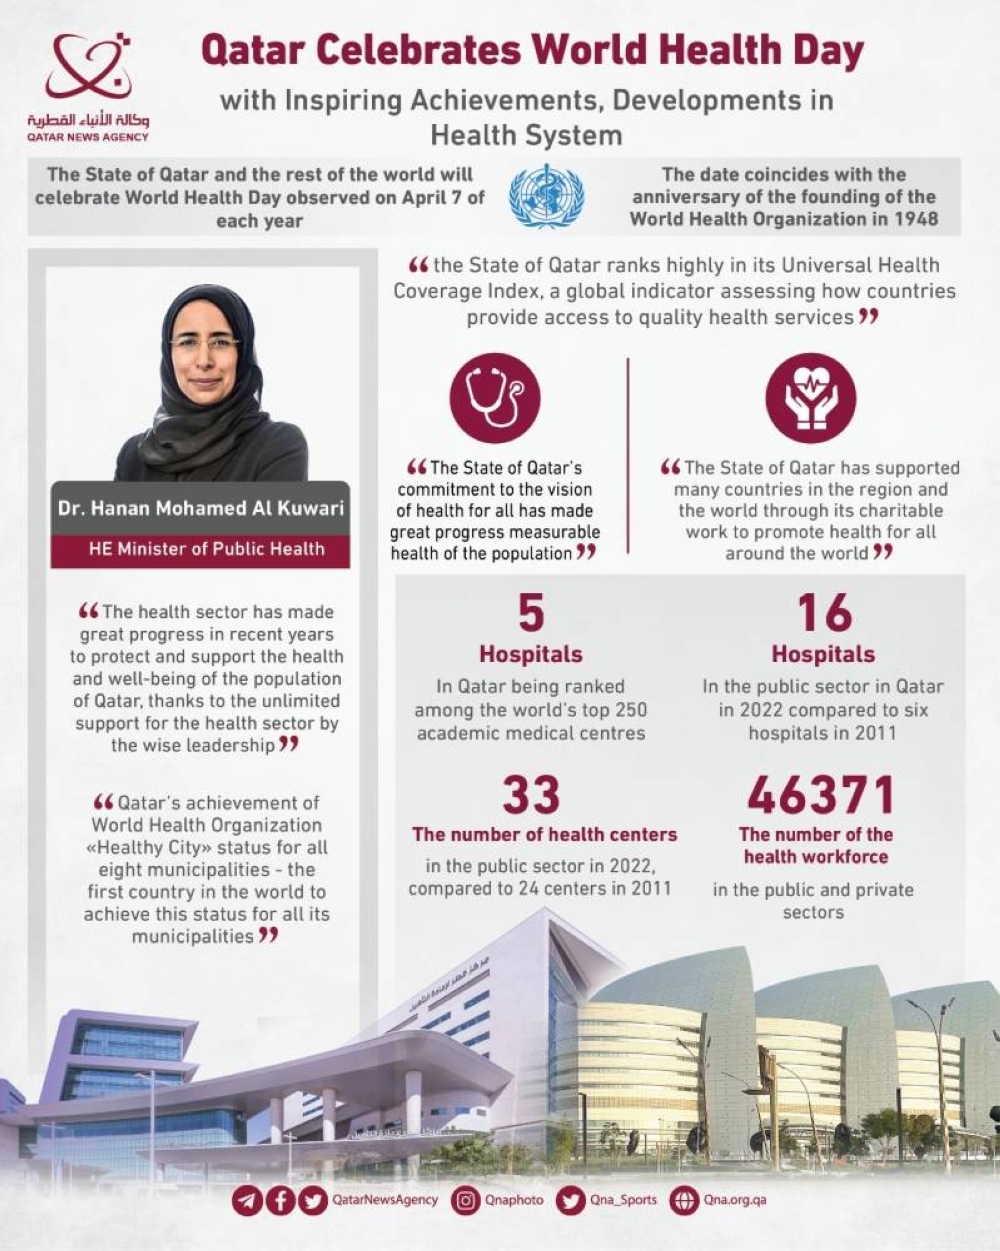 Qatar celebrates World Health Day with inspiring achievements, developments in health system 